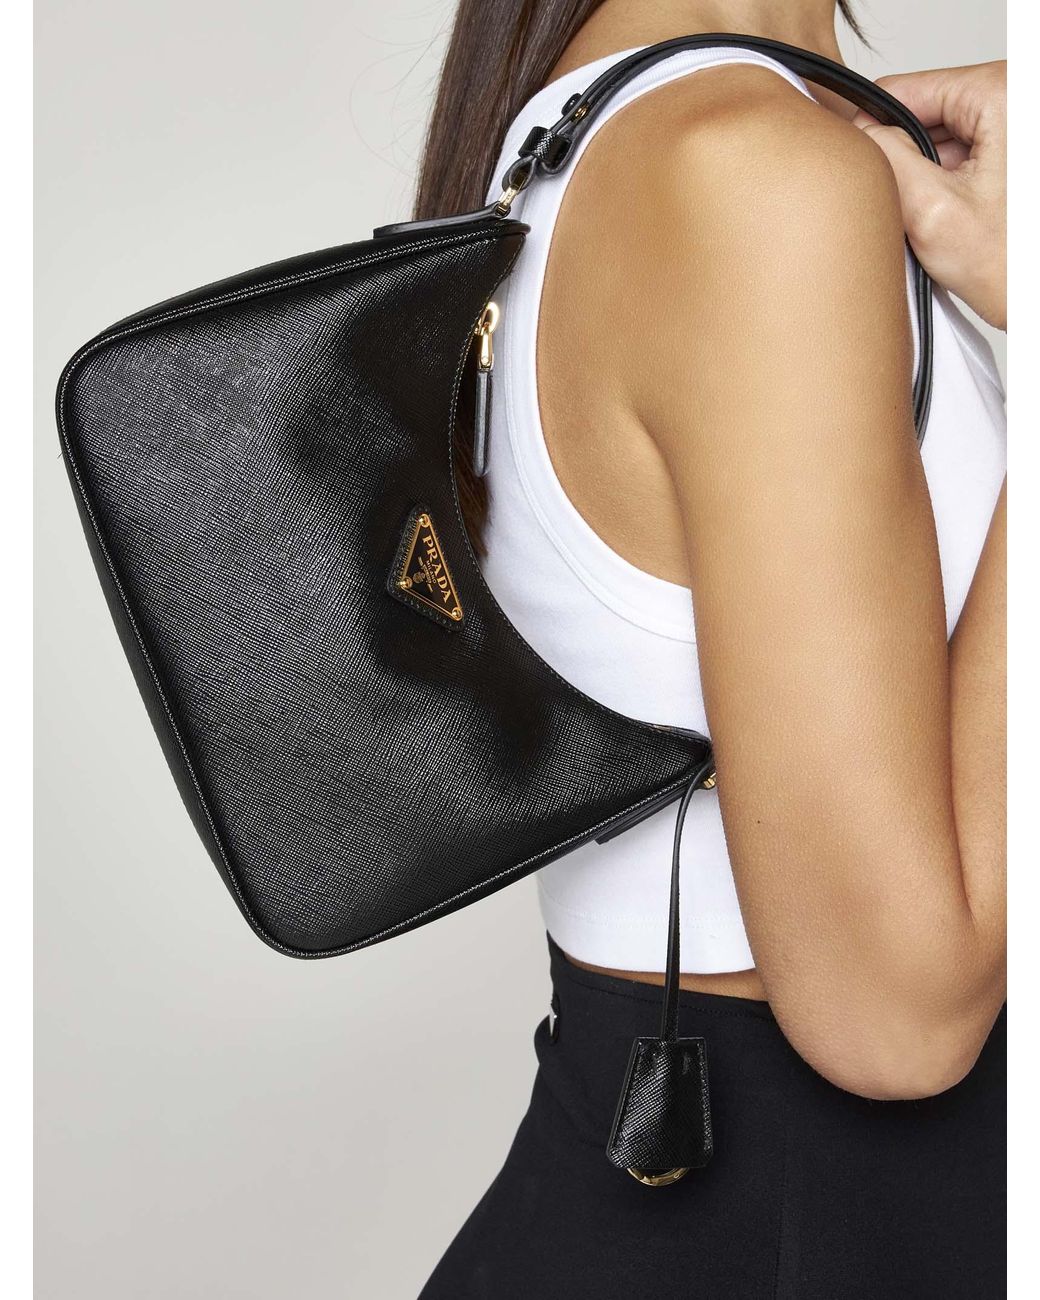 Prada Saffiano Leather Mini Bag in Black | Lyst